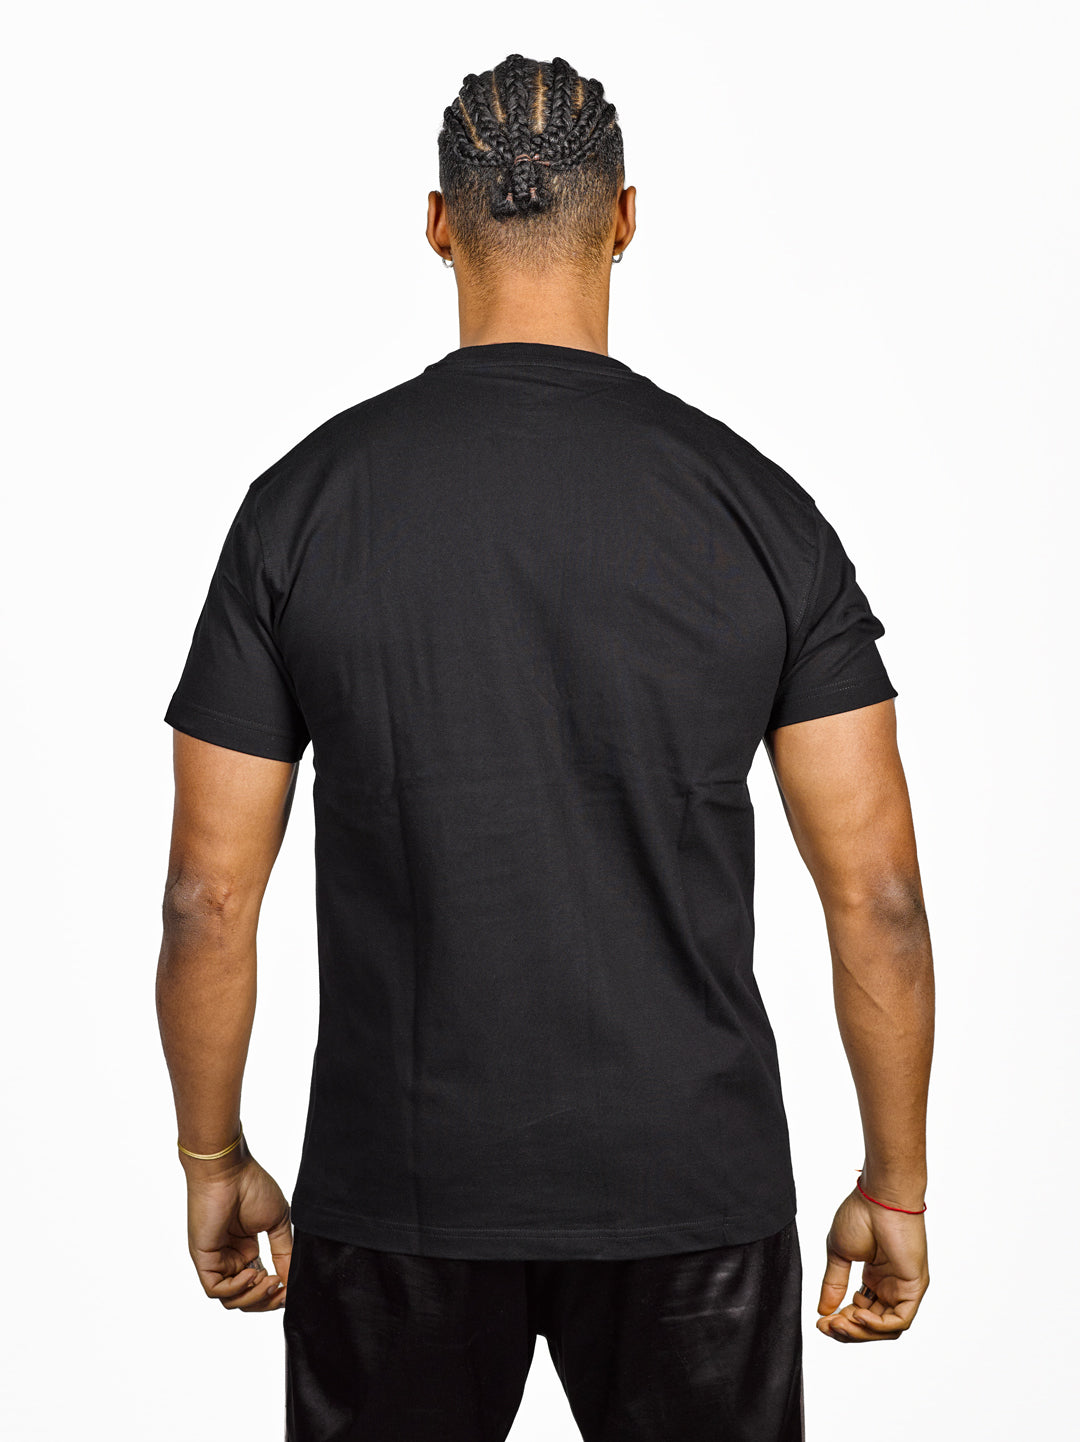 Exetees Regular Round Neck T-Shirt (Black) - exetees.com